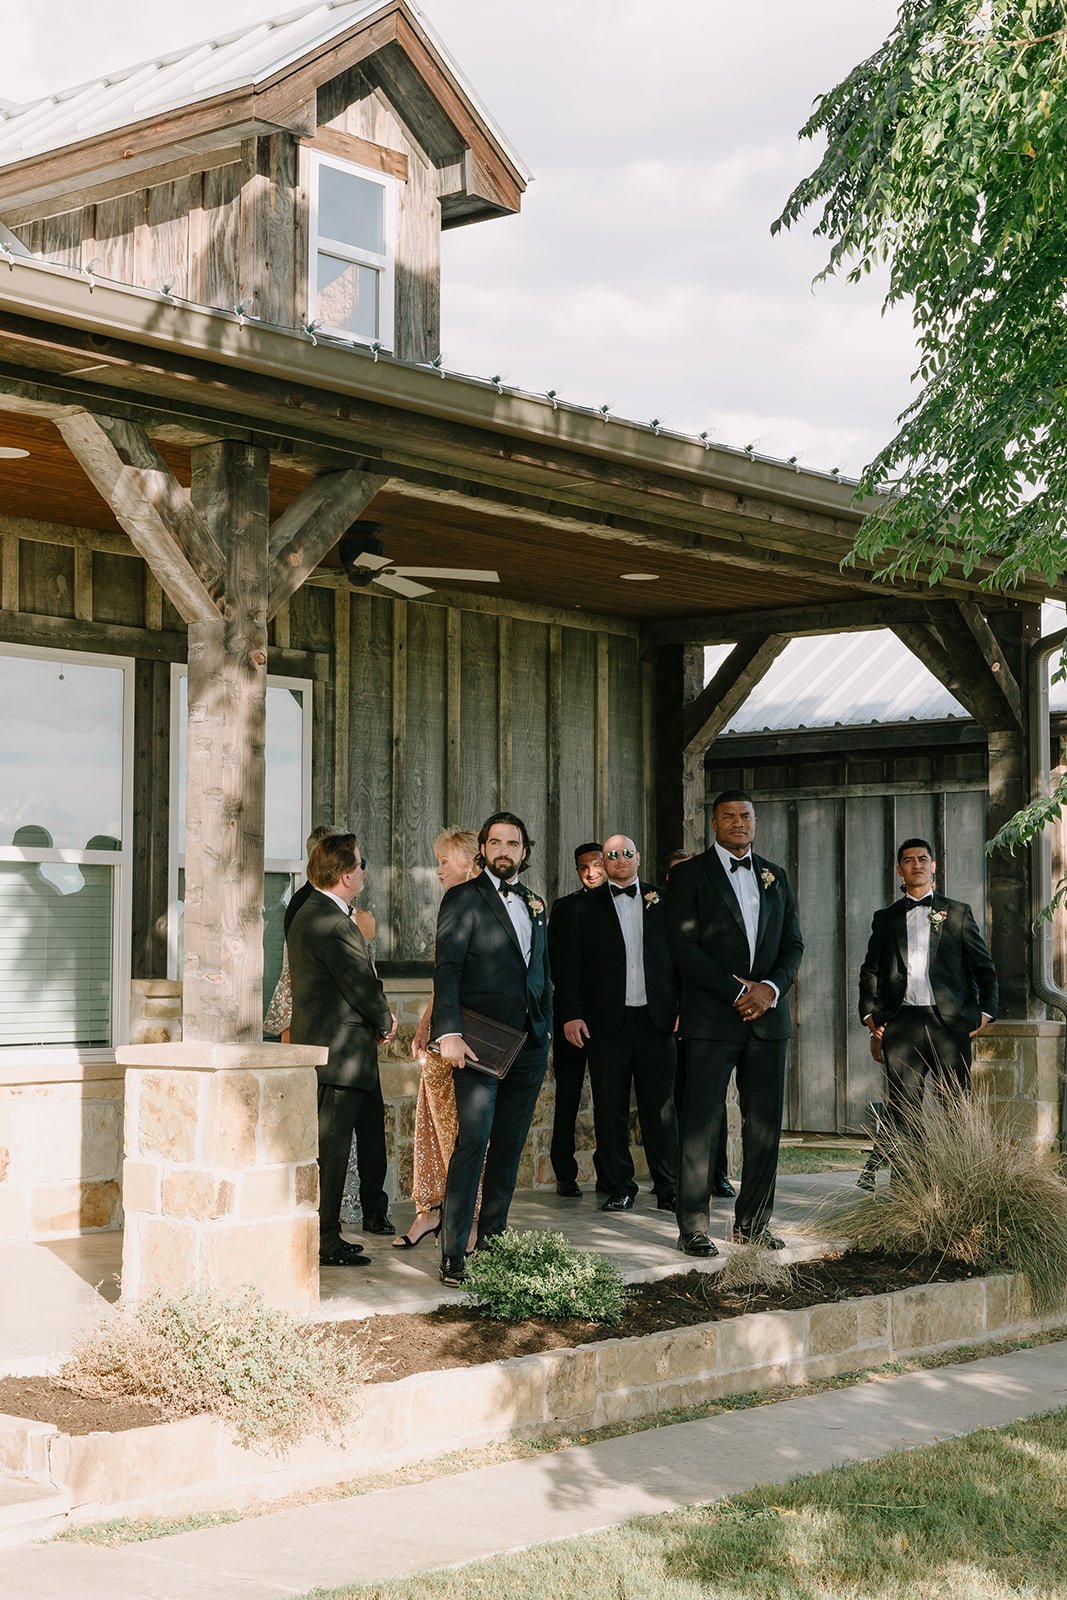 A Modern Barn Wedding Venue Camp Hideaway in TX - Texas Wedding Photography - Natalie Nicole Photo (6).jpg